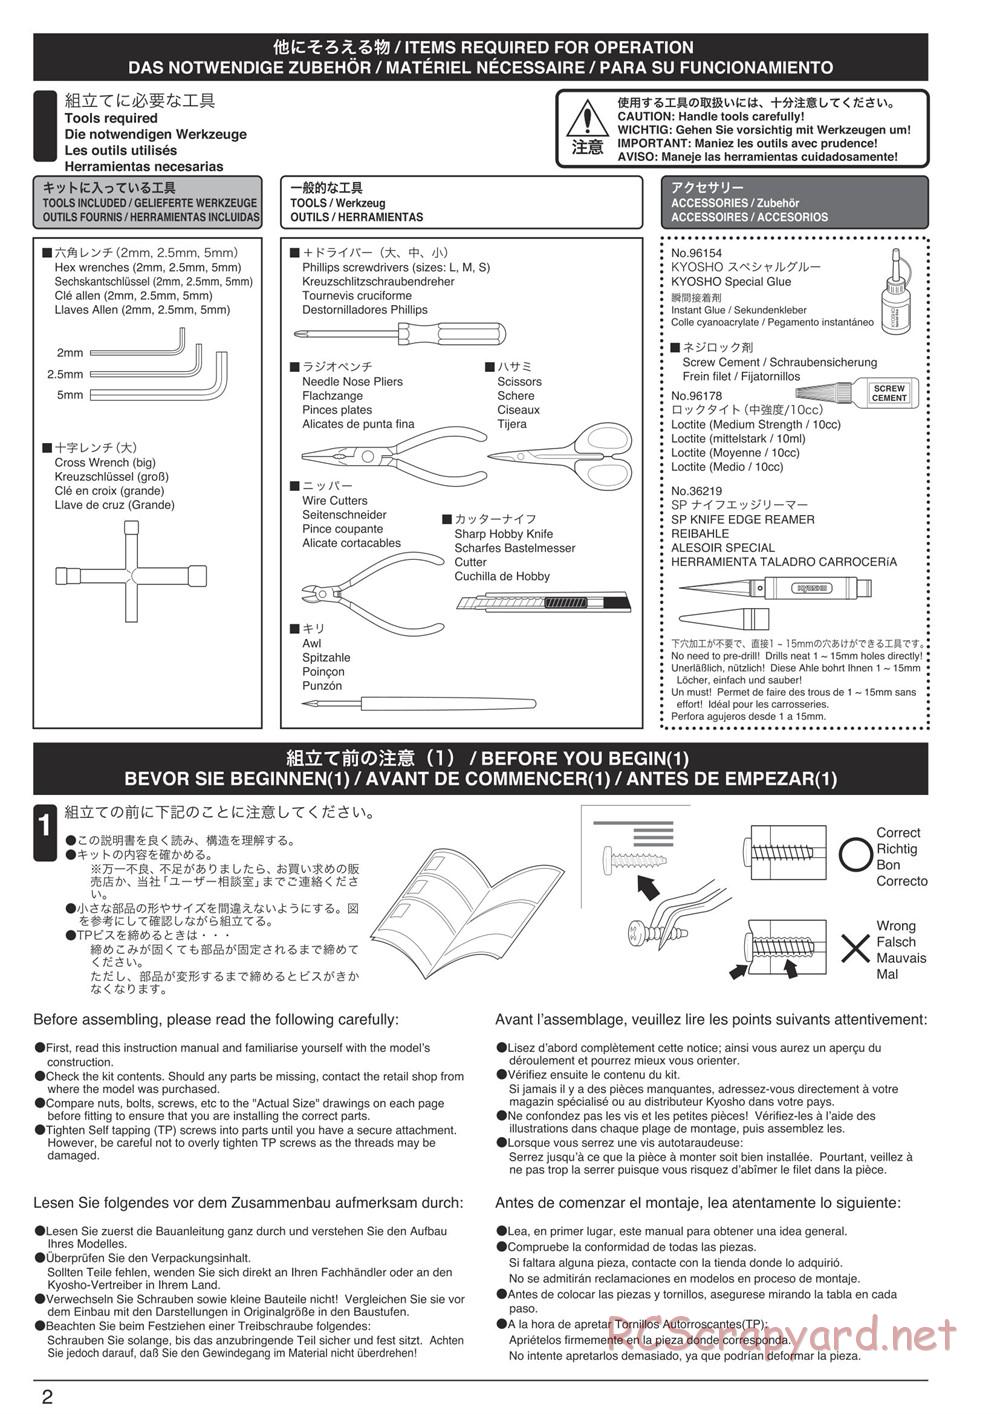 Kyosho - DMT VE-R - Manual - Page 2